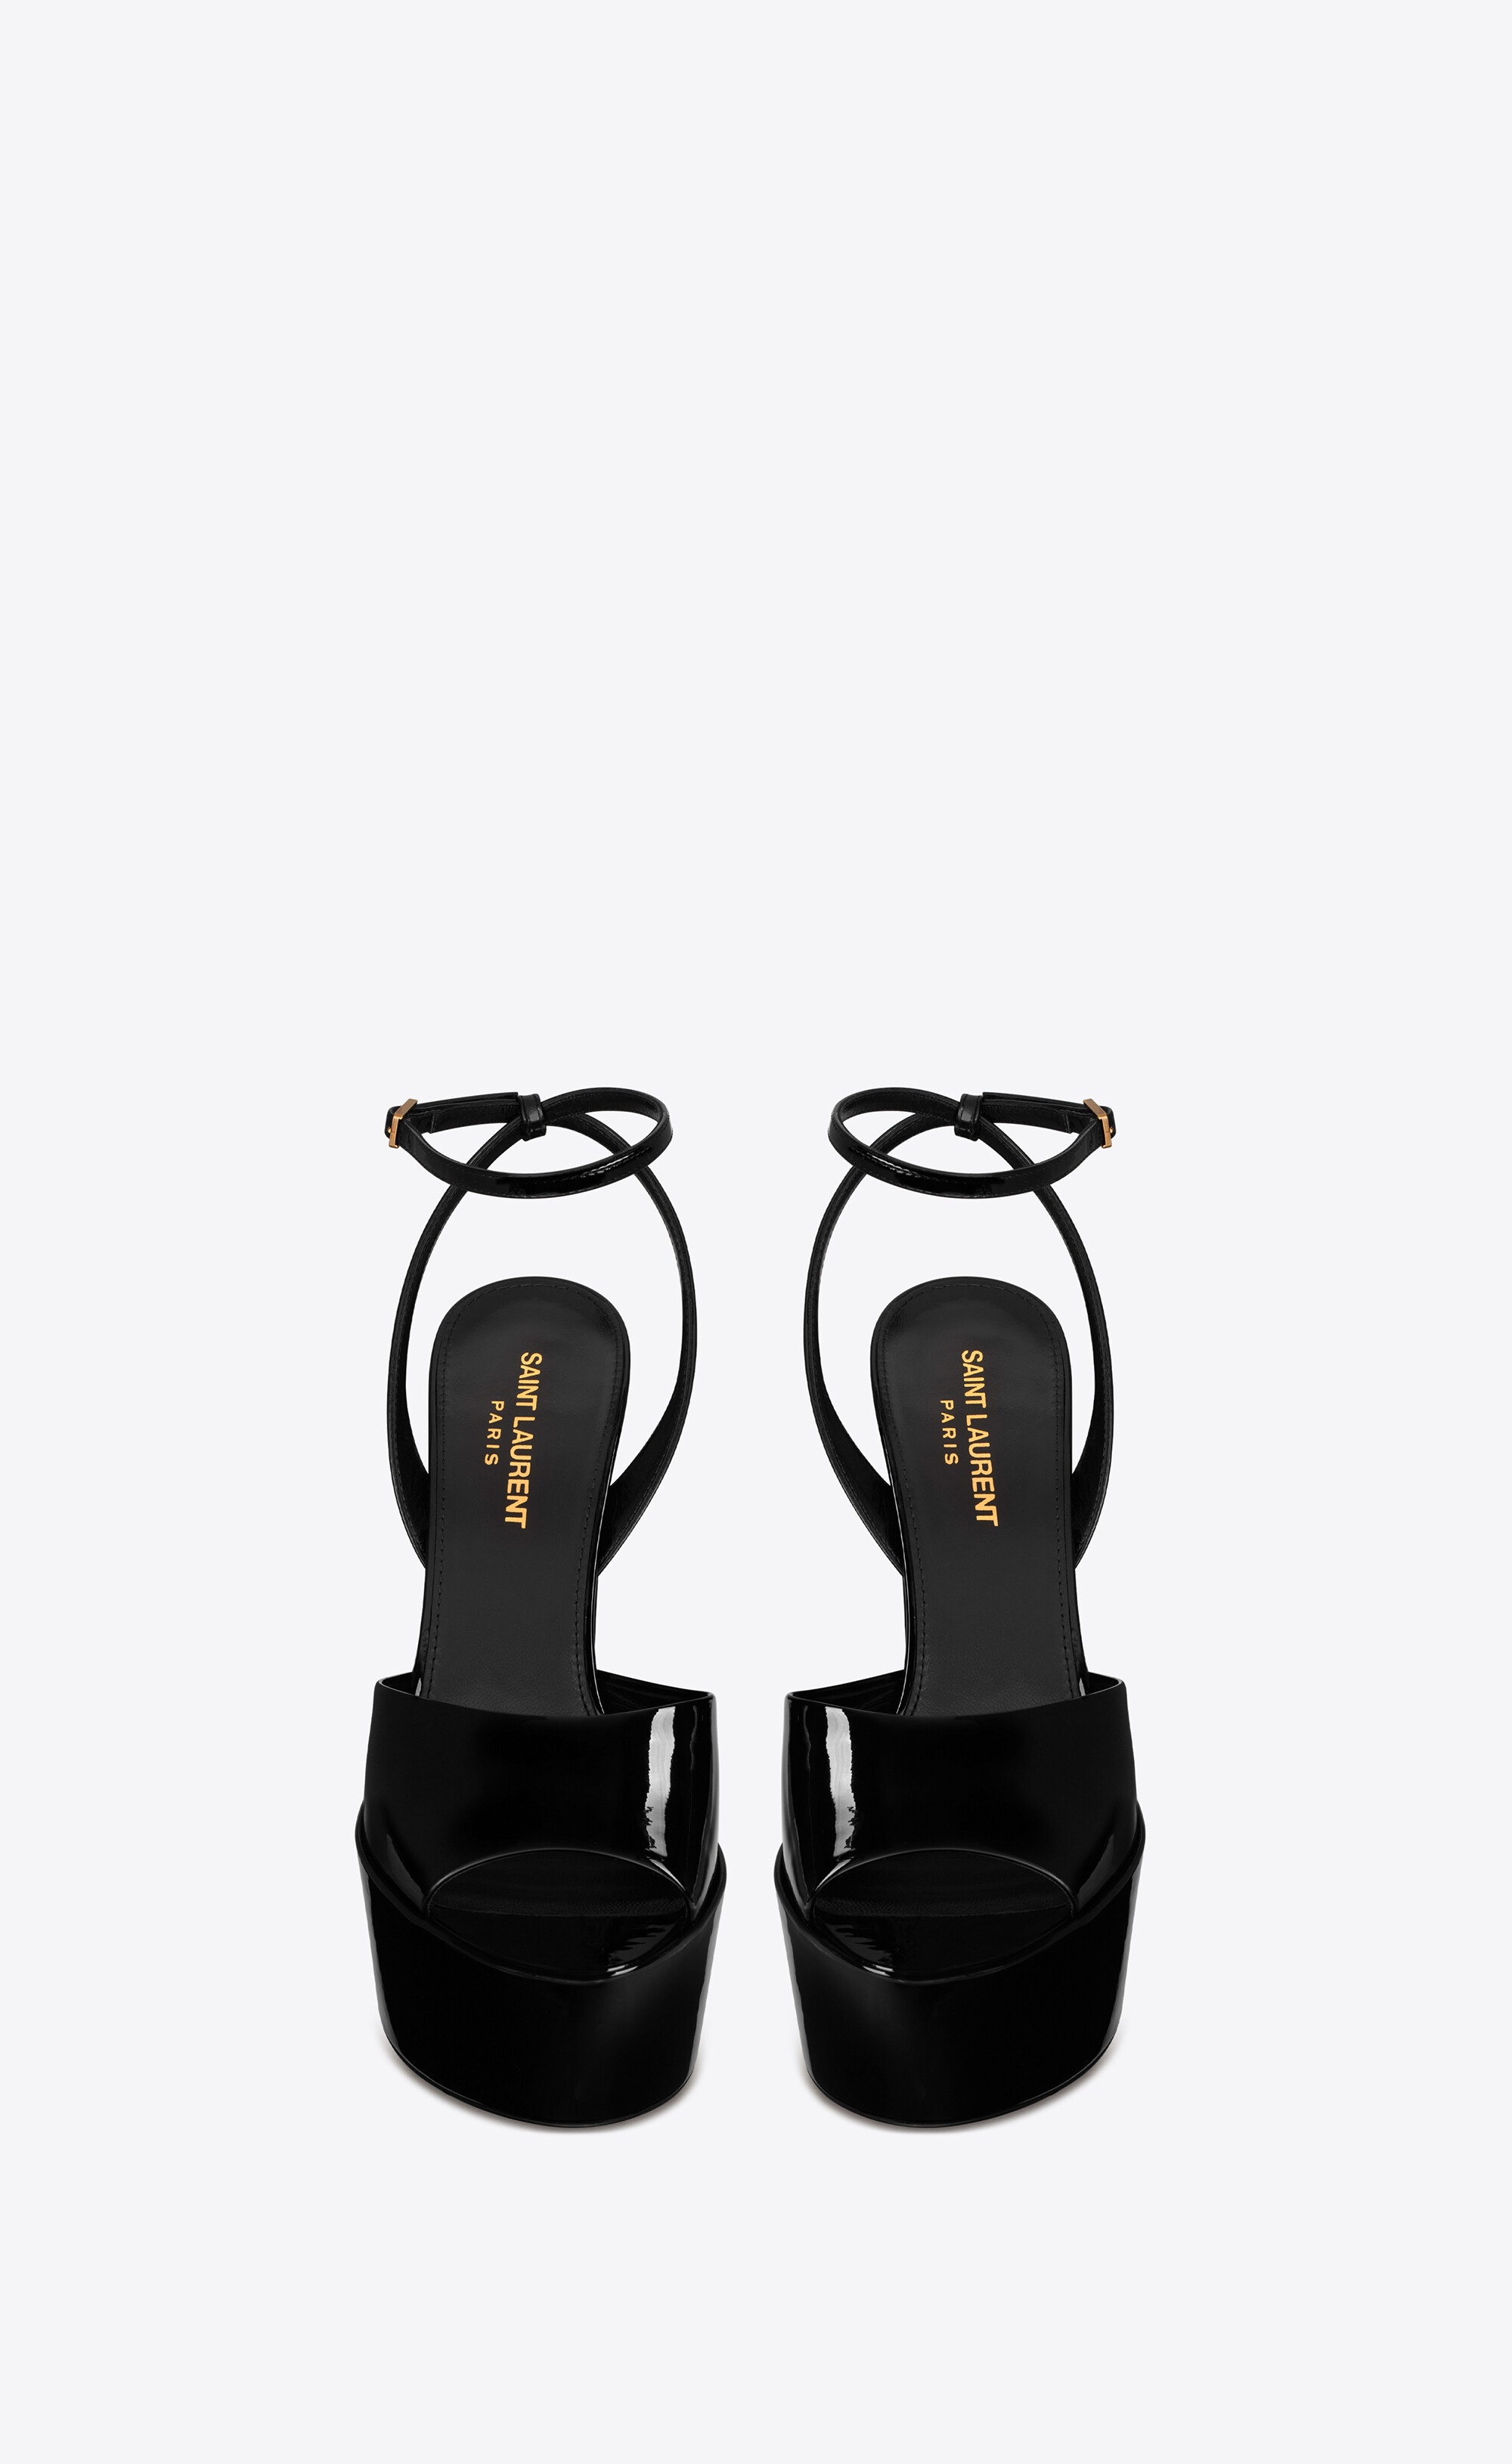 jodie platform sandals in patent leather - 2